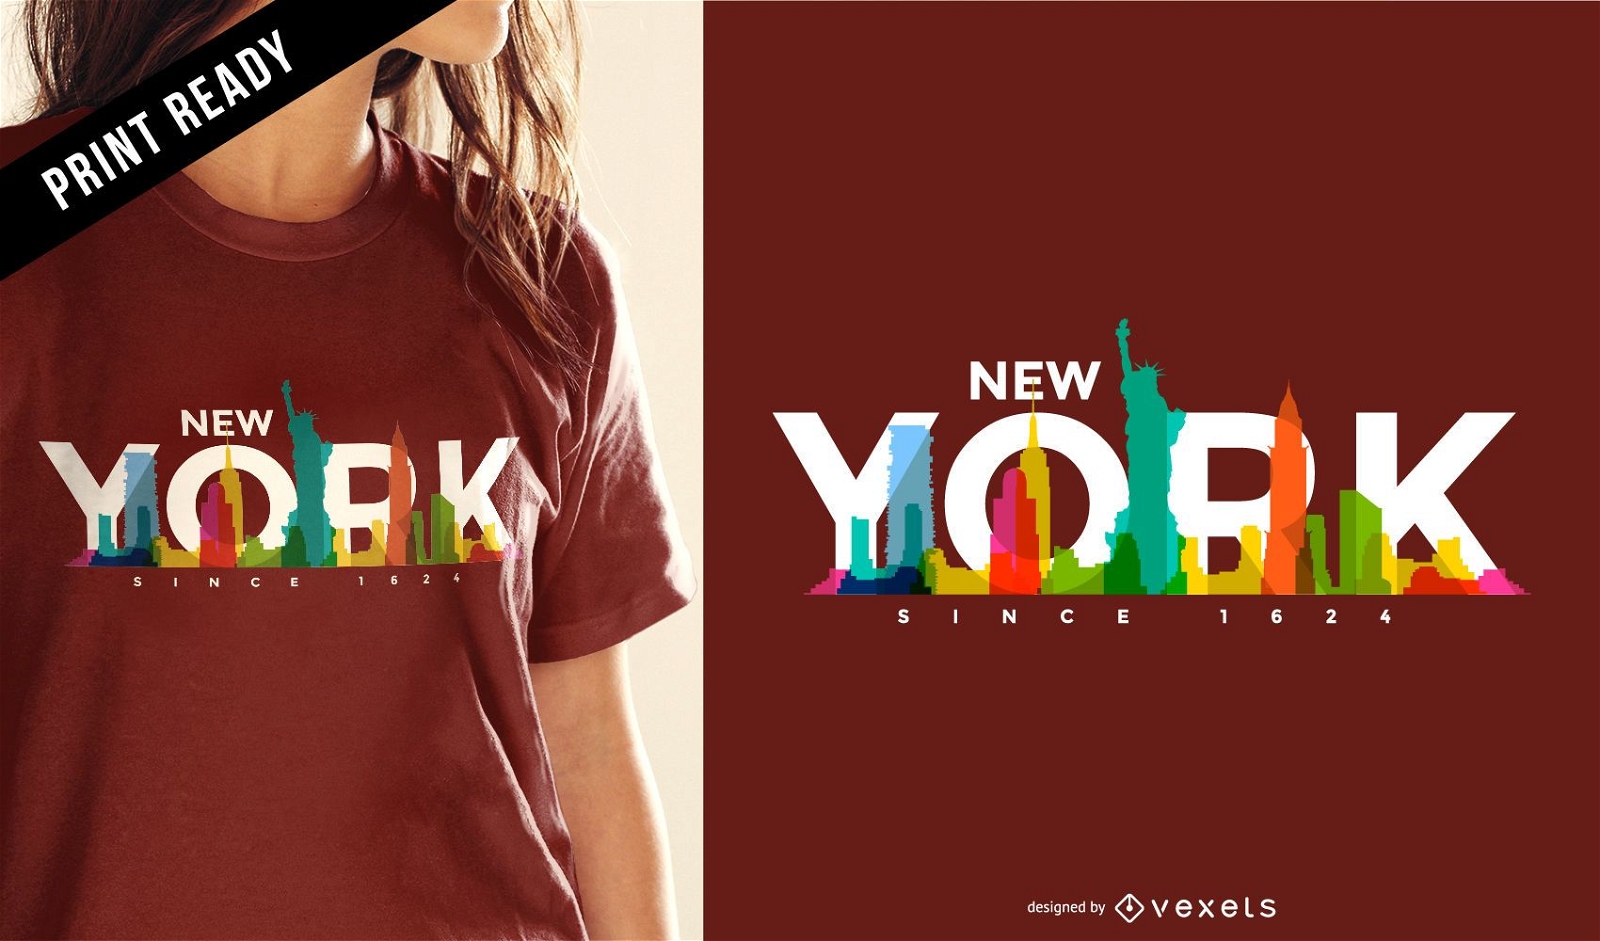 Colorful New York skyline t-shirt design